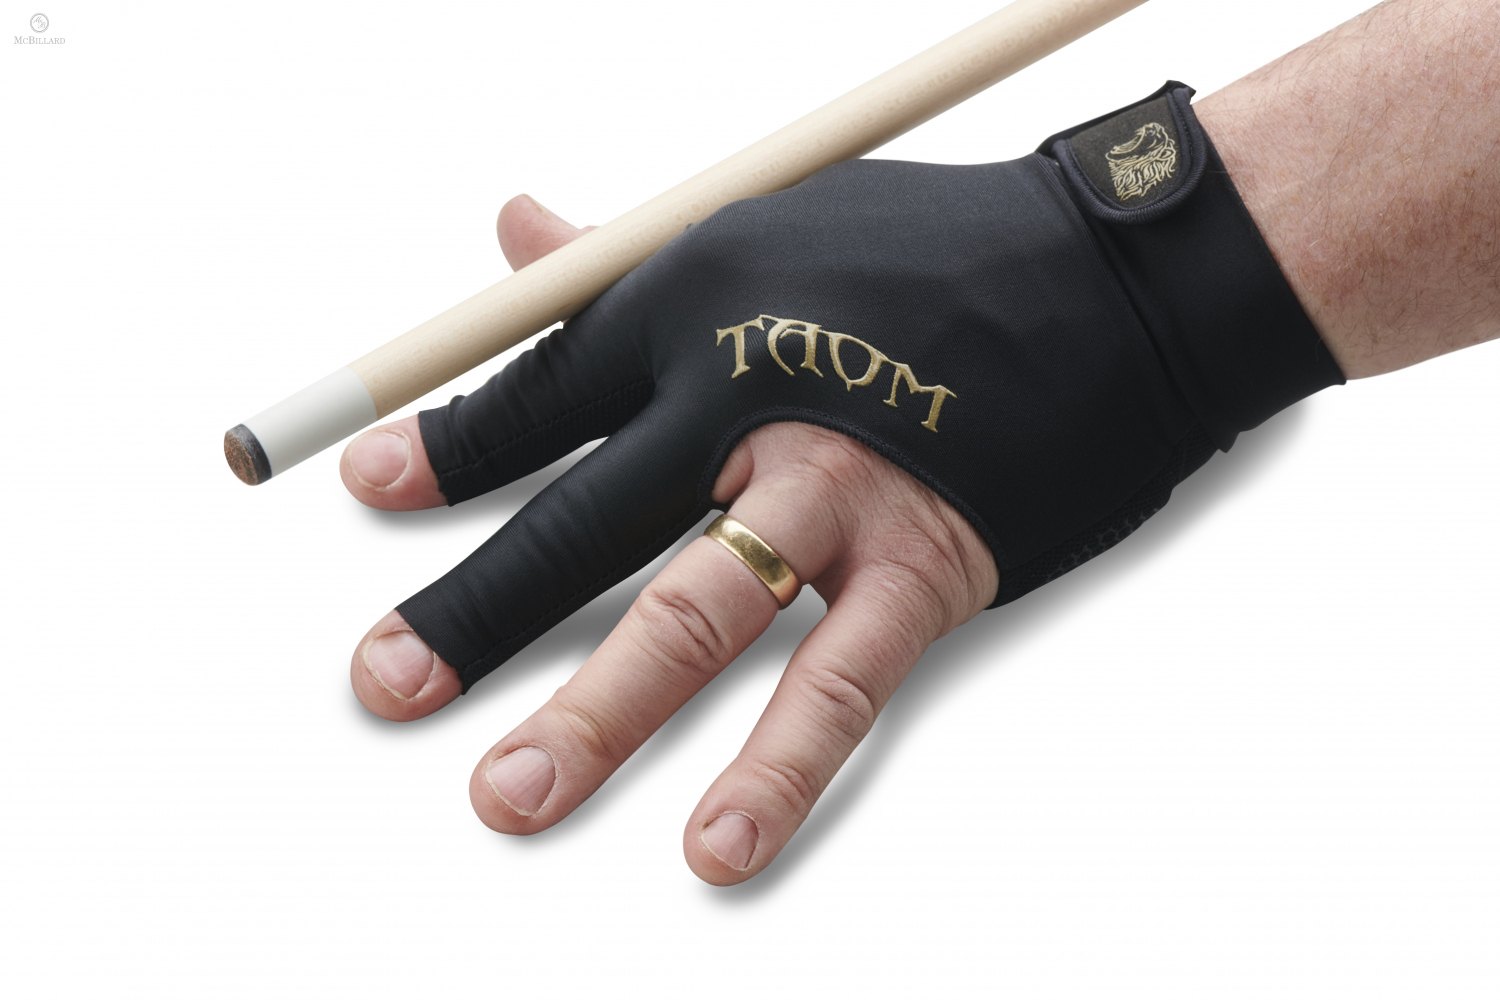 Billiard Glove TAOM - 3-finger - For right hand - Size M